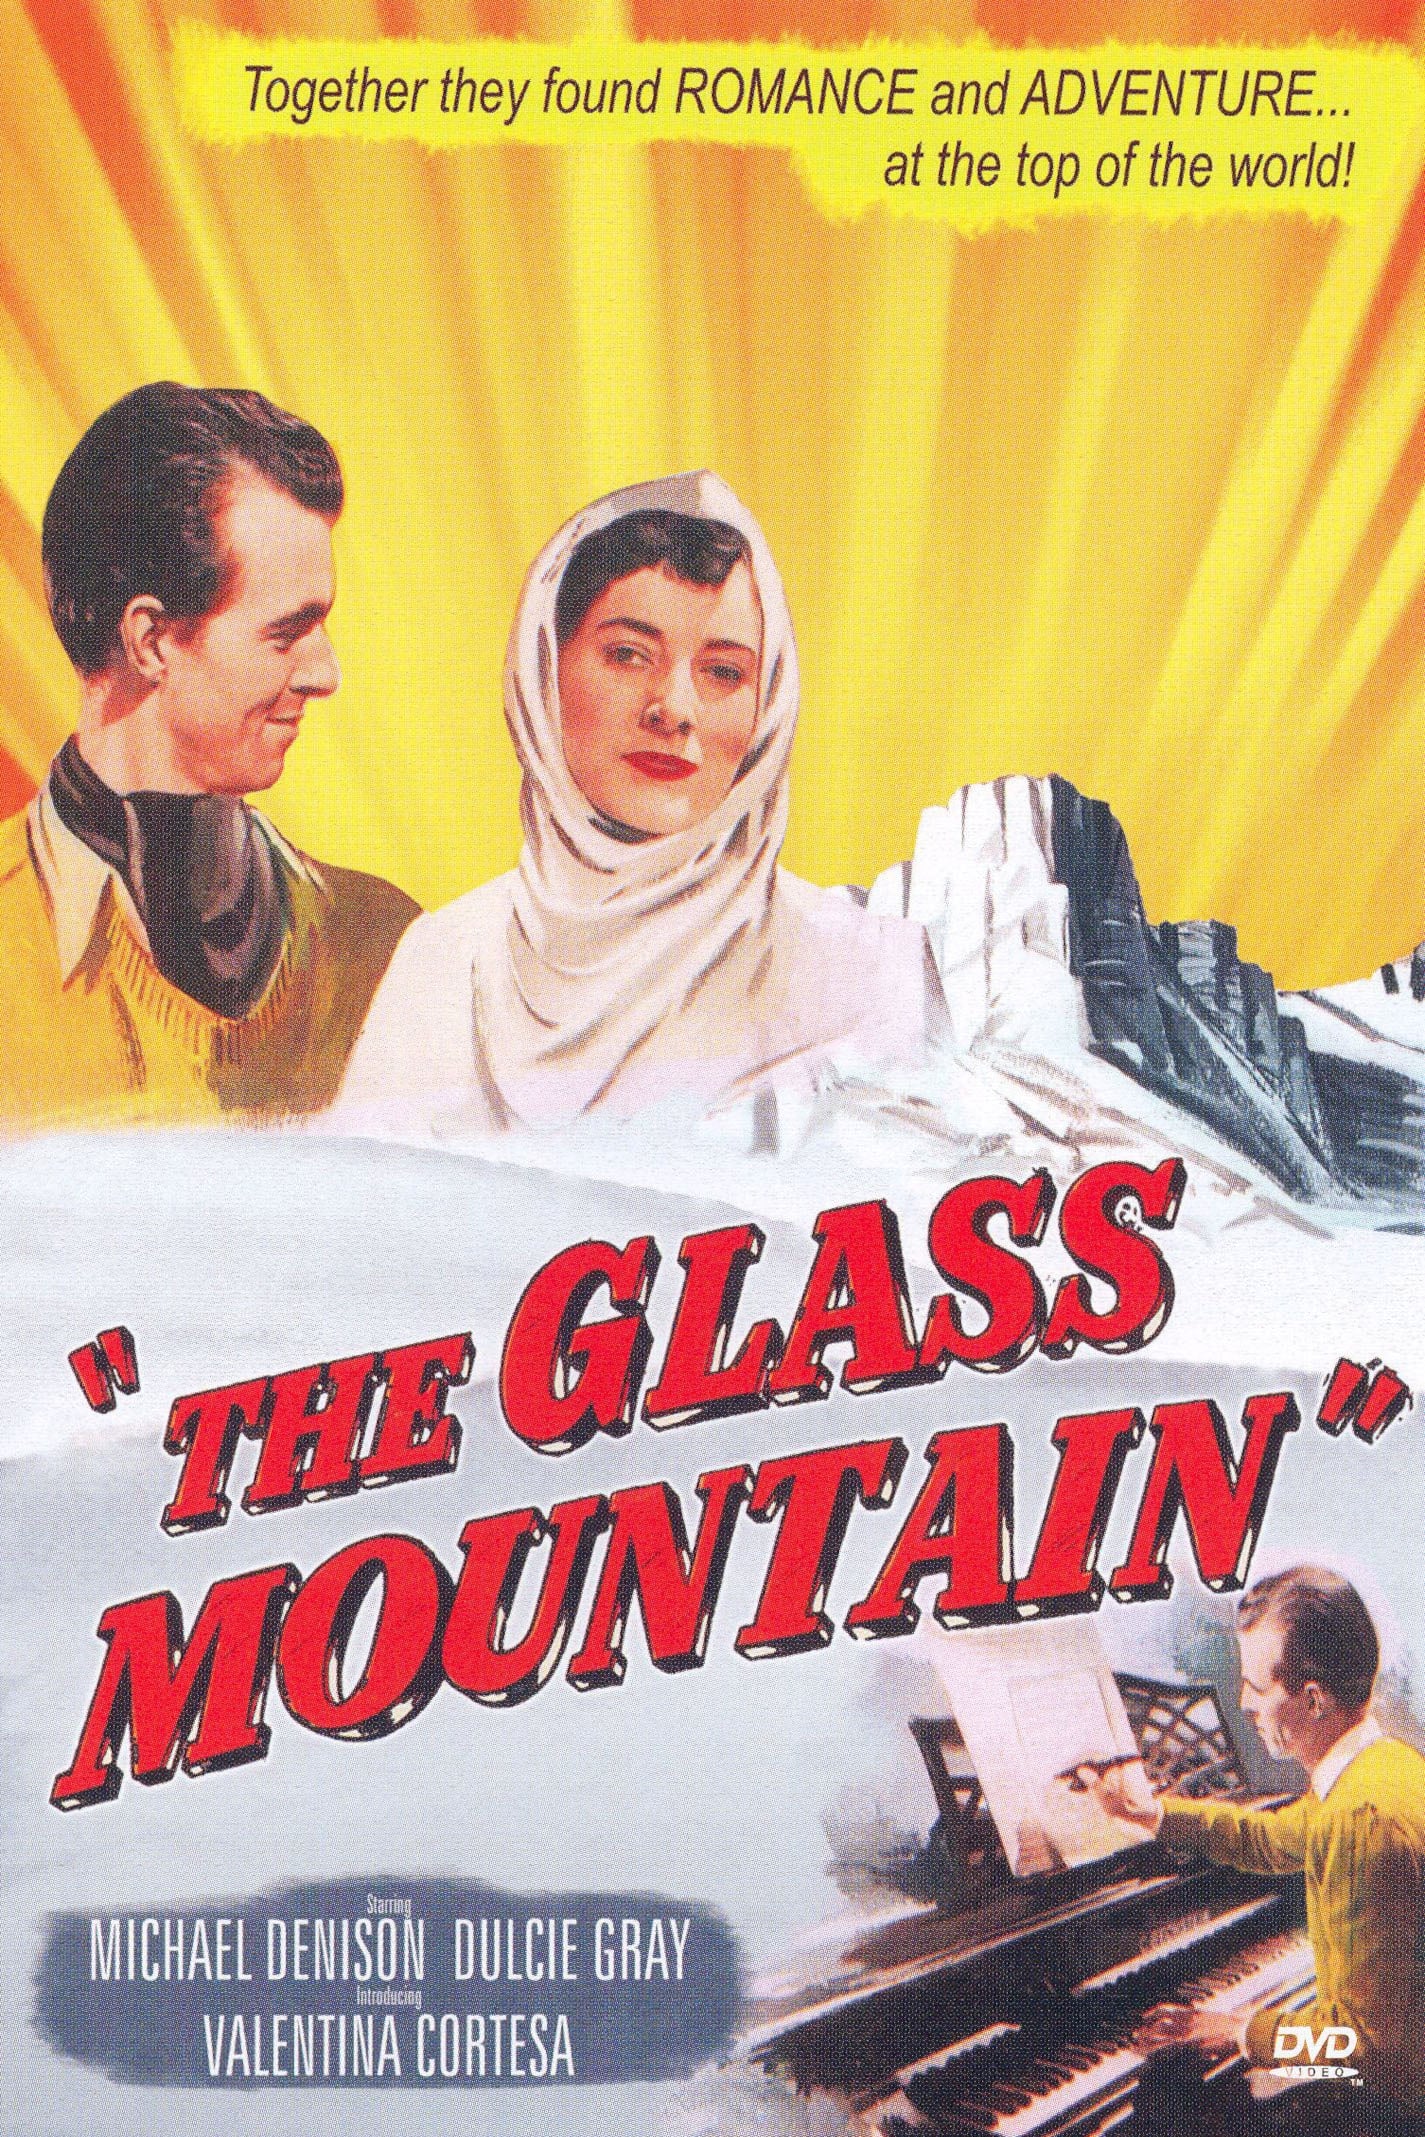 The Glass Mountain (1949)